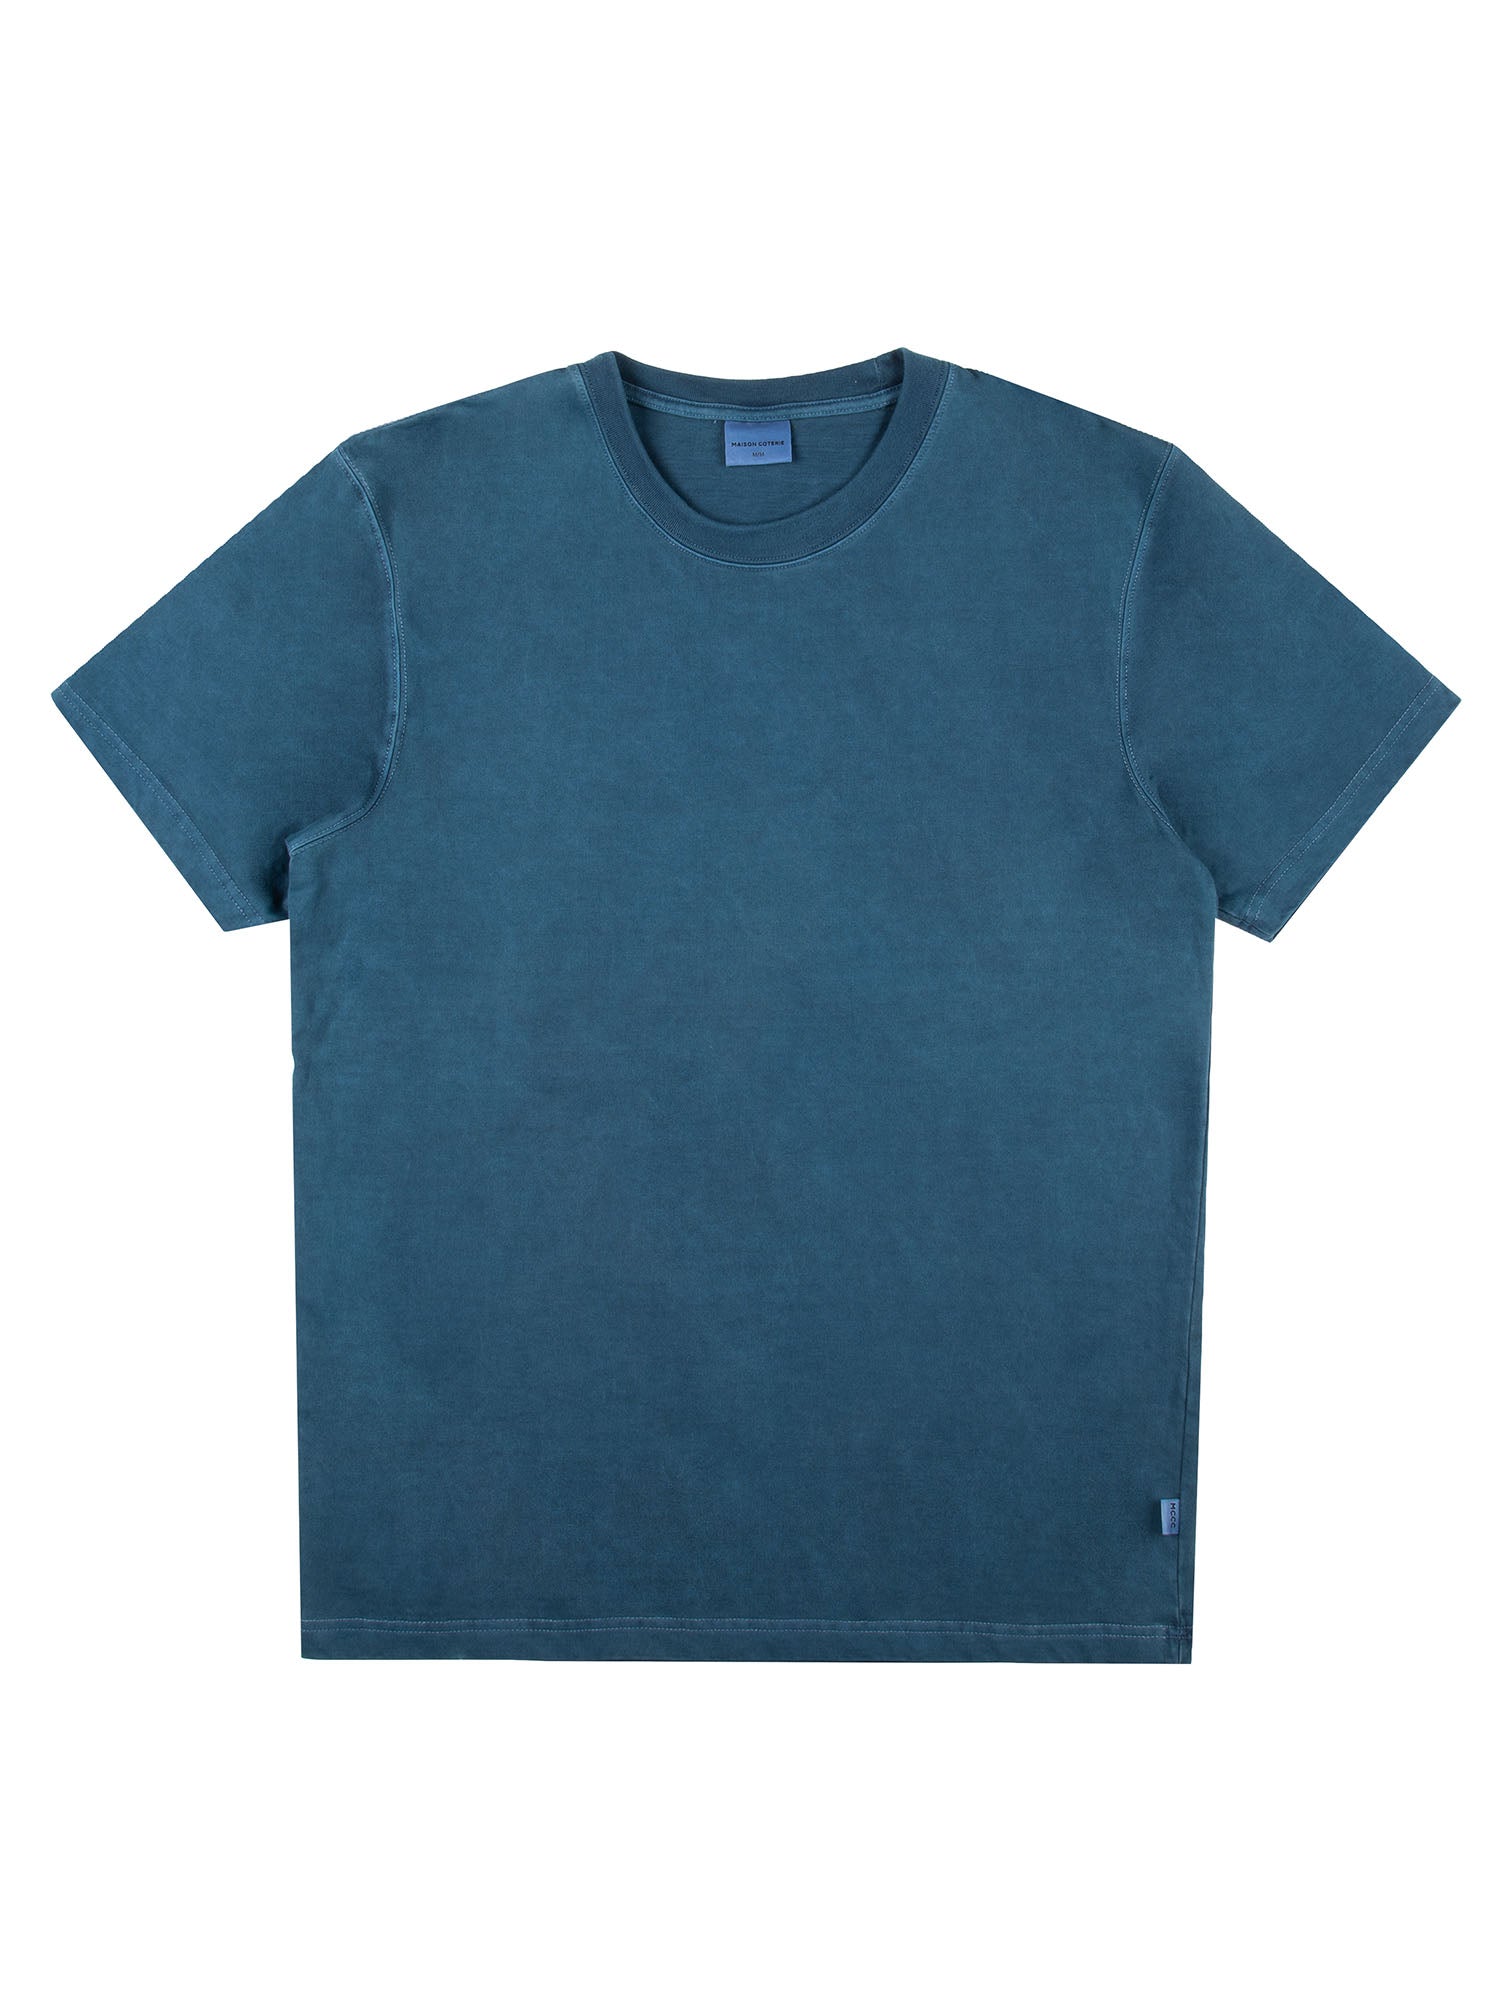 Avery - Pigment Dye T-Shirt - Blue